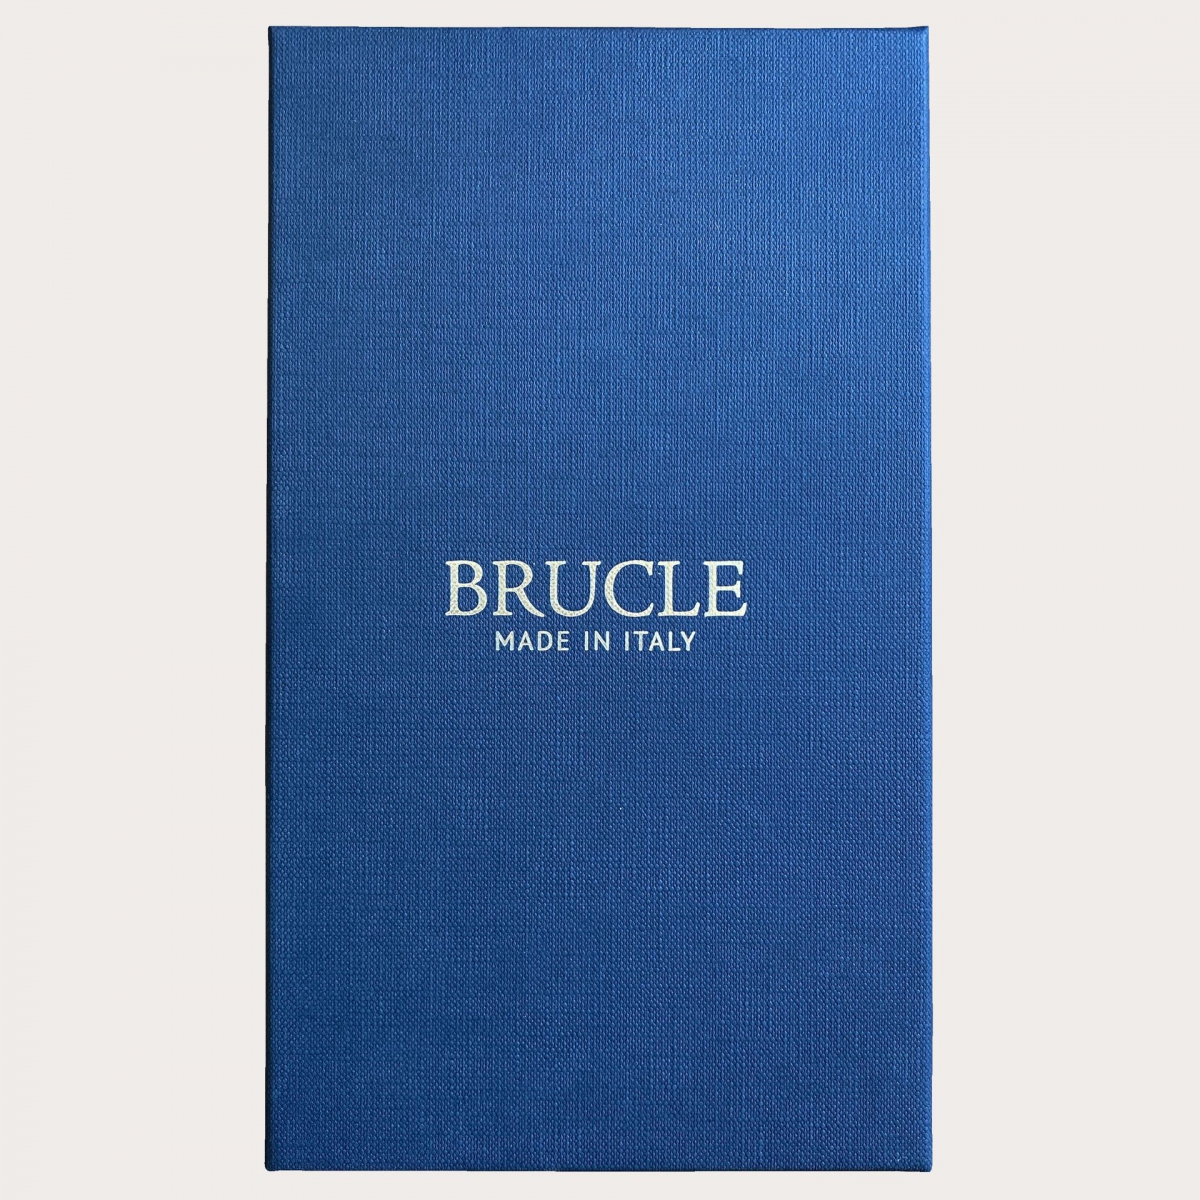 BRUCLE Eleganti bretelle sottili nichel free blu navy con righe a contrasto